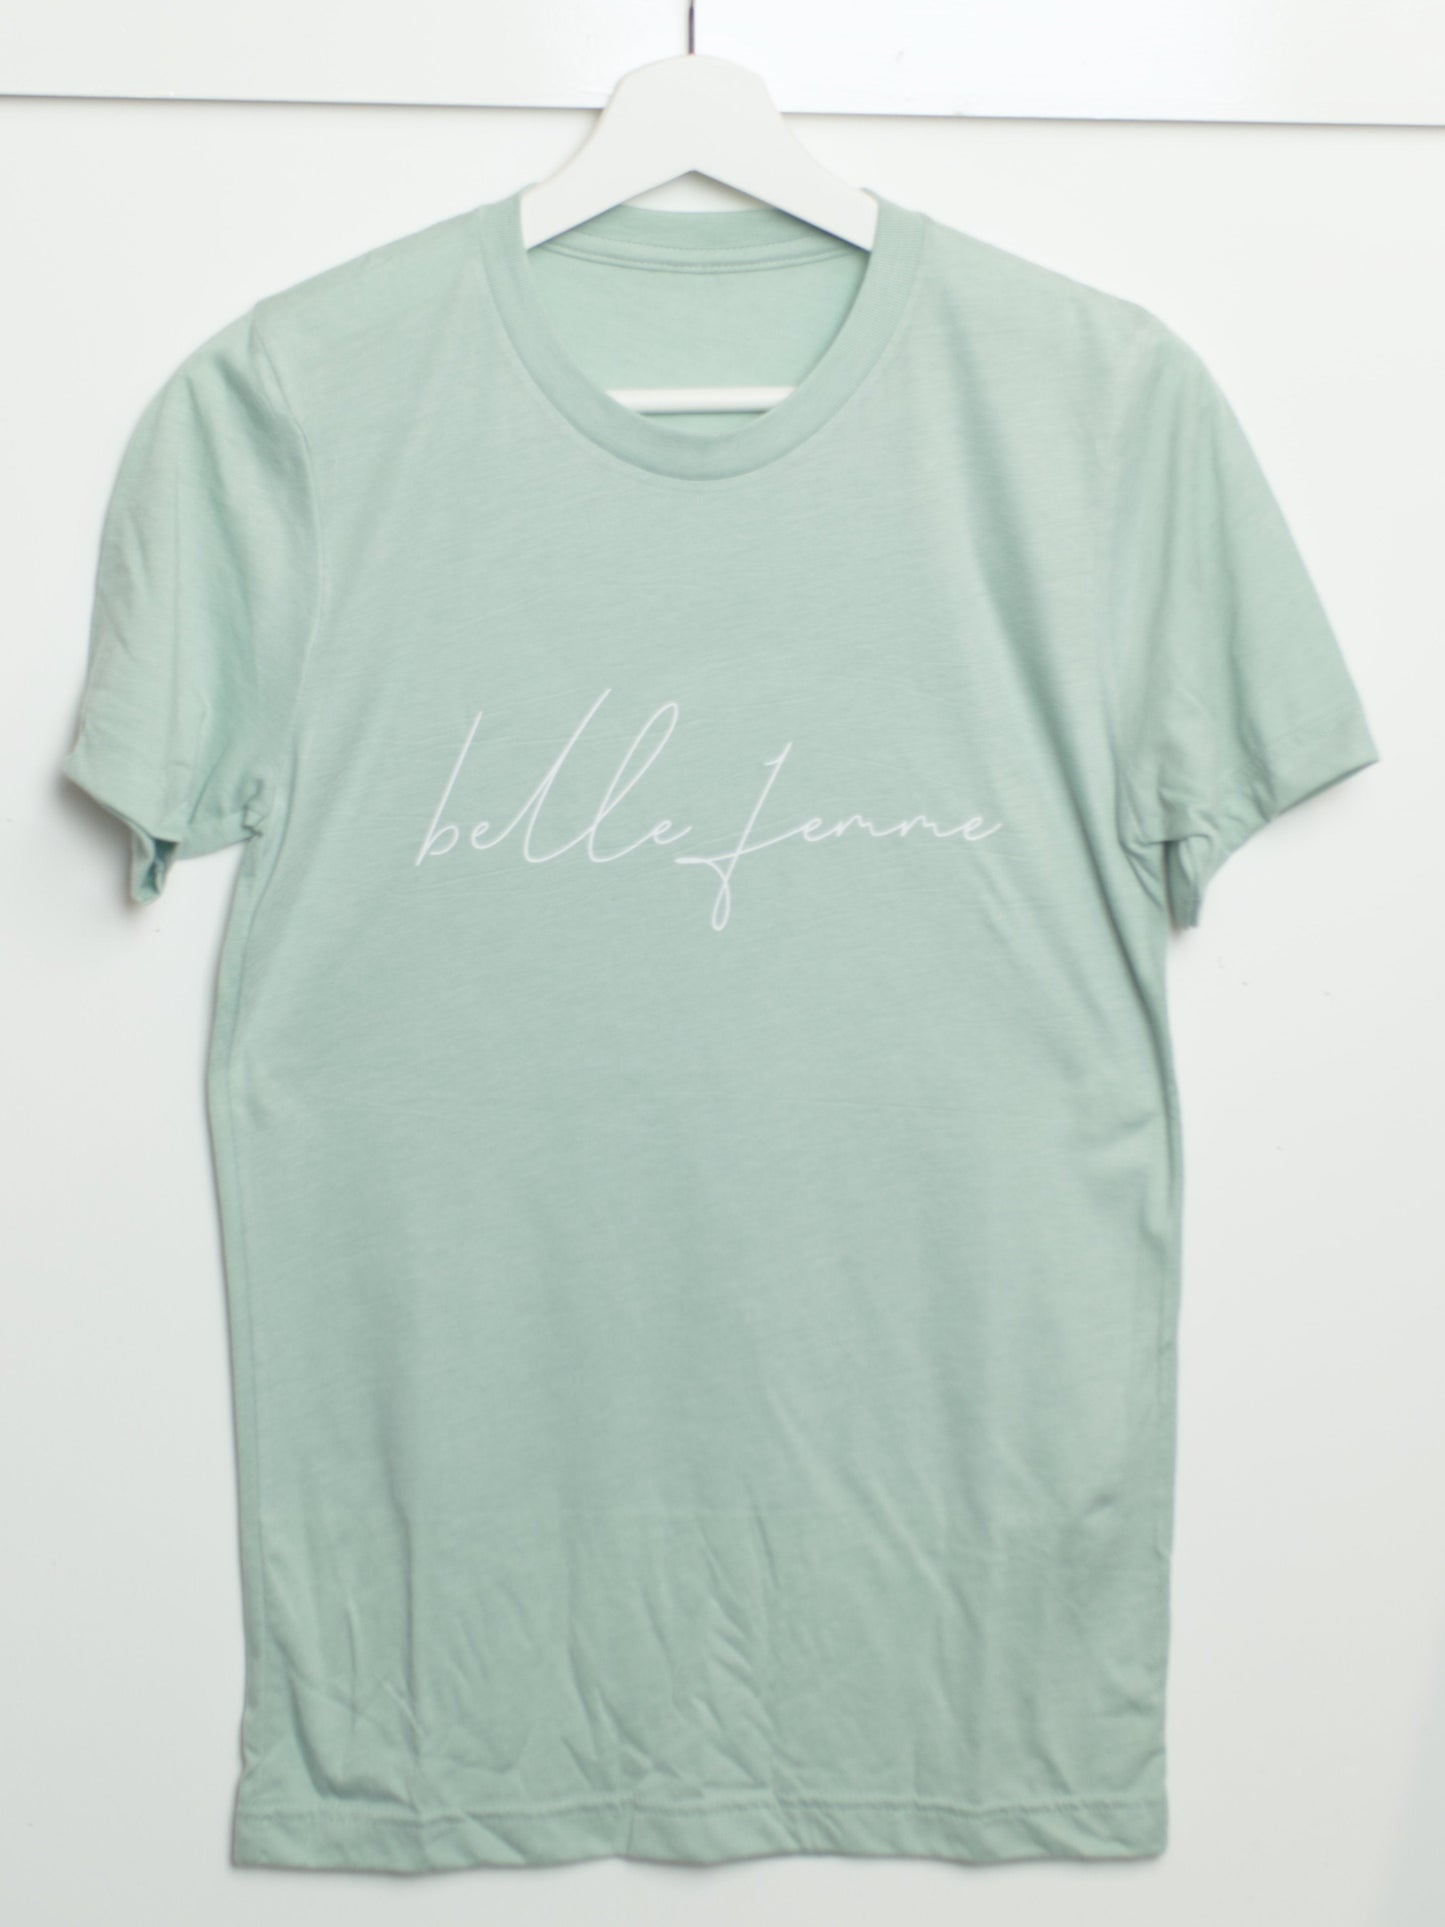 SALE Belle Femme T-shirt Mint (42) Clothing Out The Purse UK 